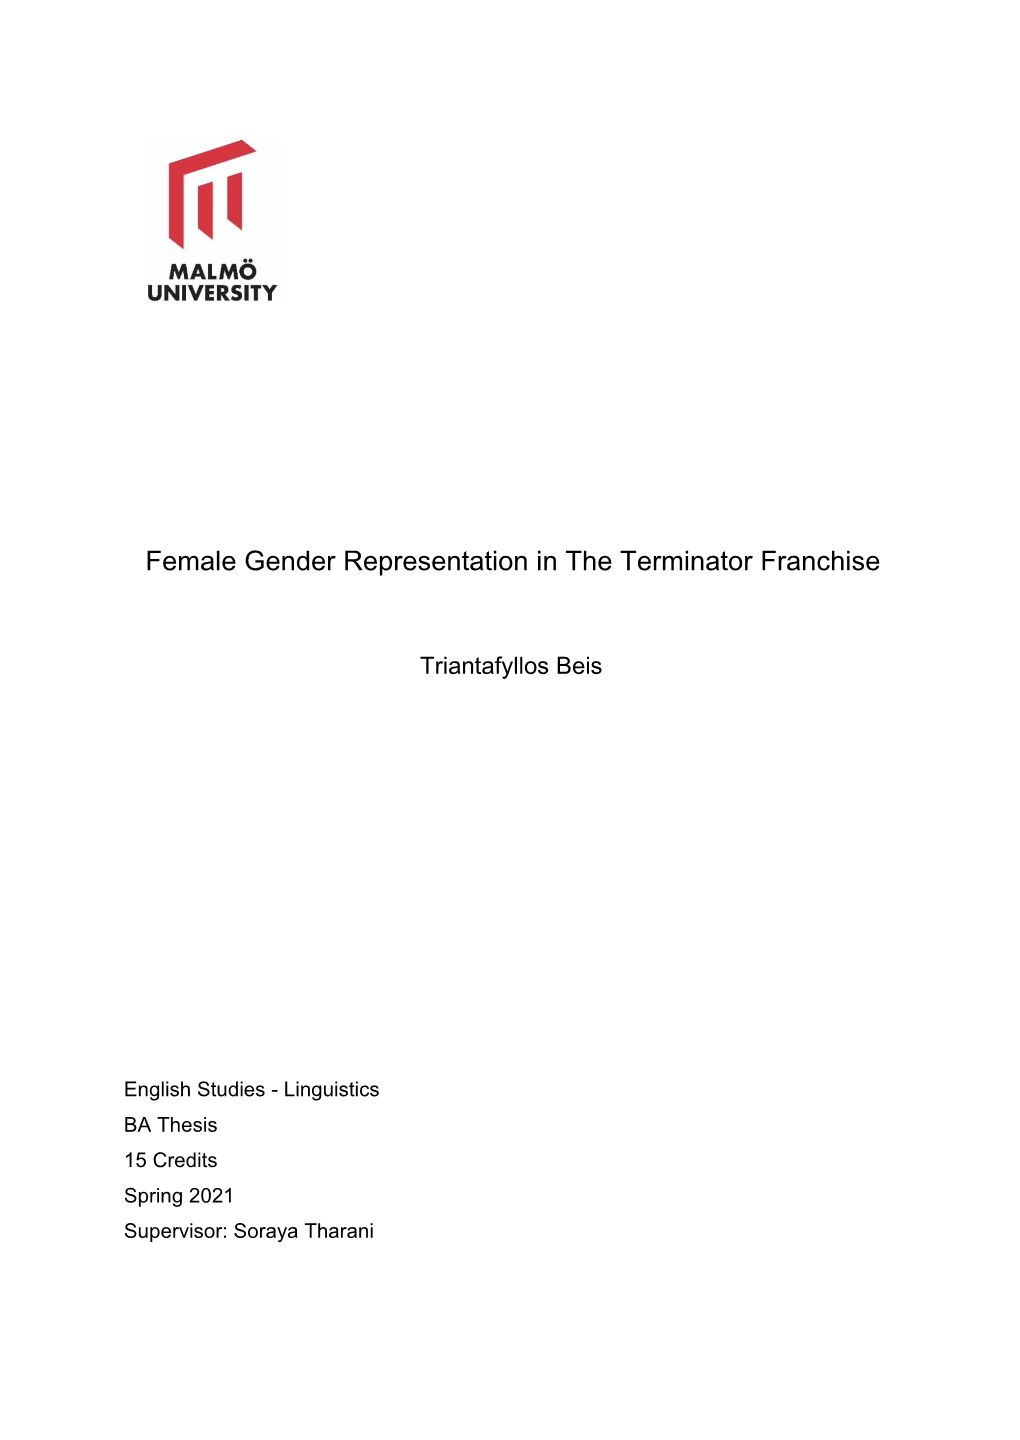 Female Gender Representation in the Terminator Franchise